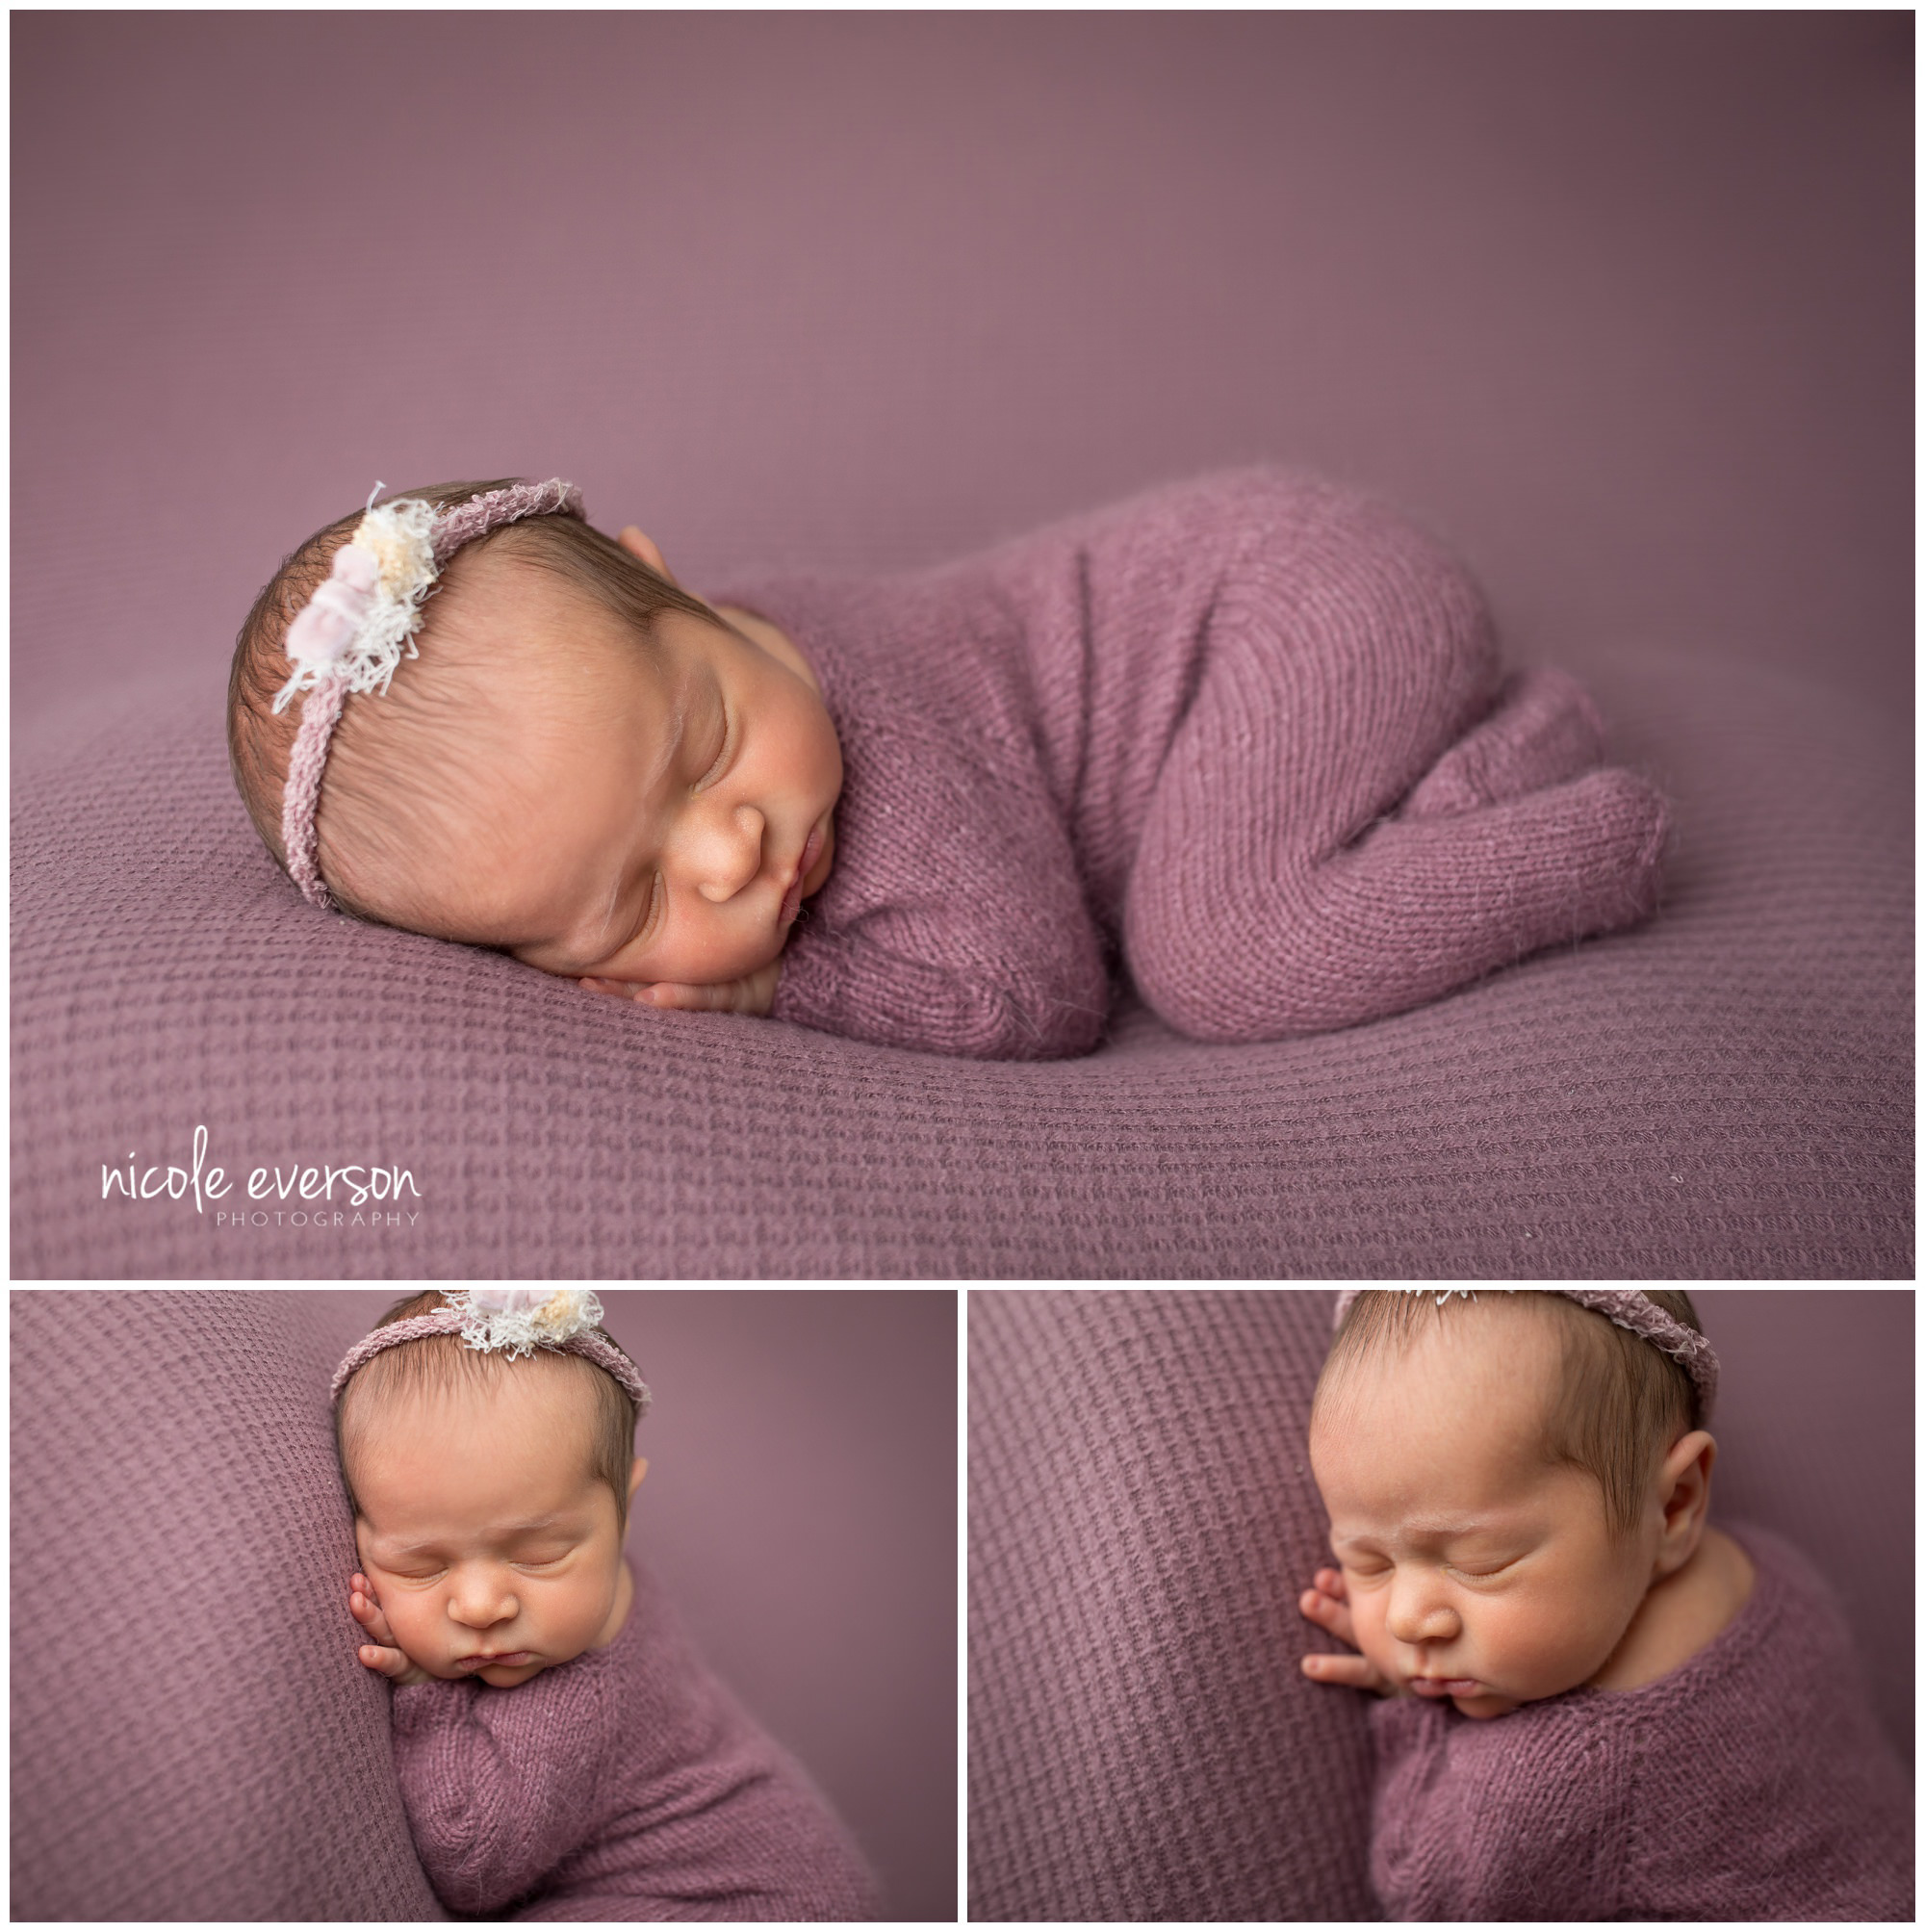 Dothan Newborn Photographer Nicole Everson Photography